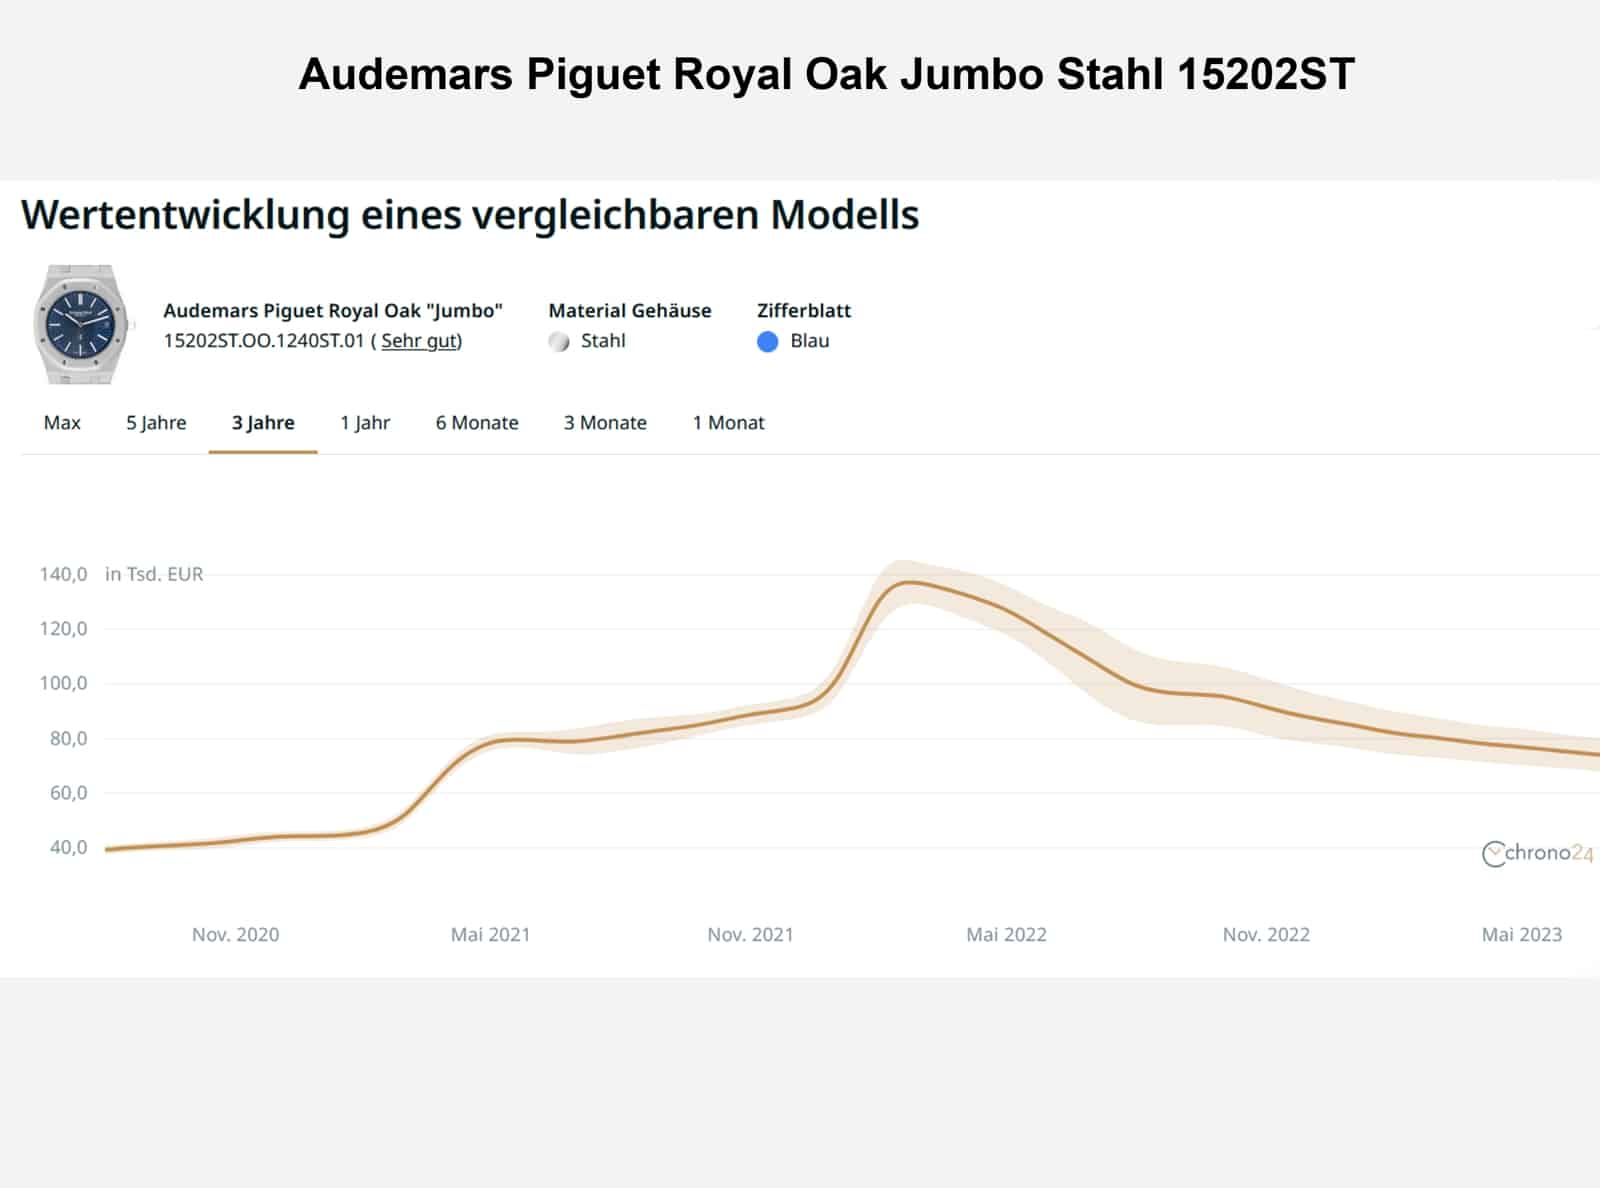 Audemars Piguet Royal Oak 15202ST Preisentwicklung Chrono24 202307